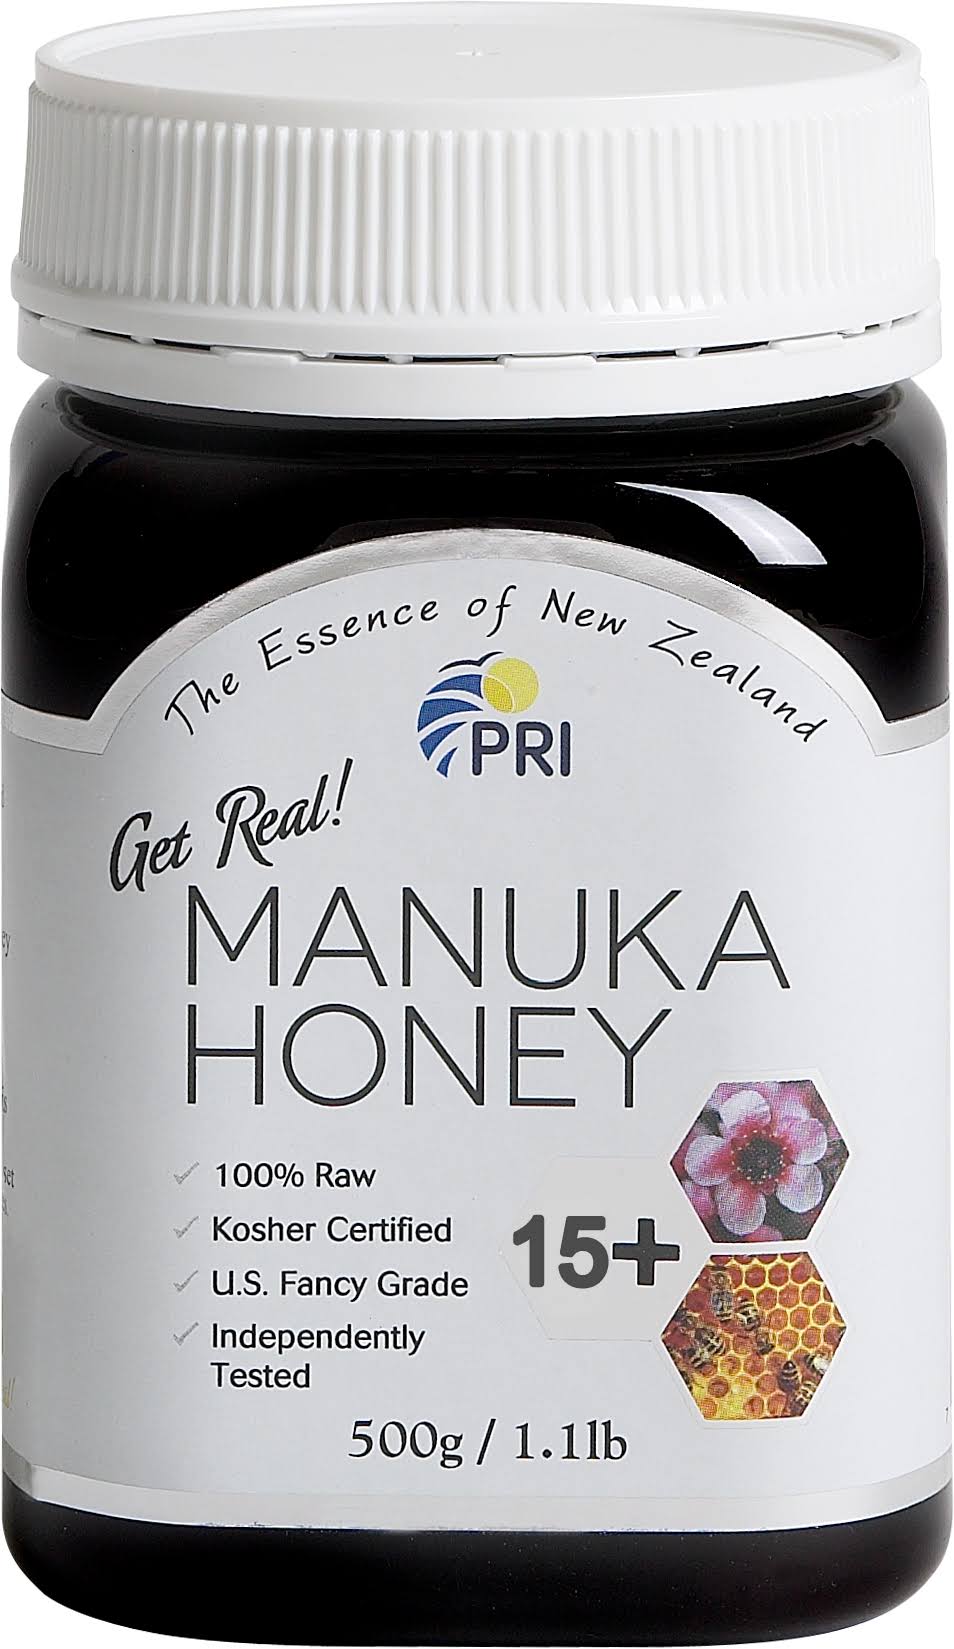 Pacific Resources Int. Manuka Honey, 15+ - 1.1 Lb